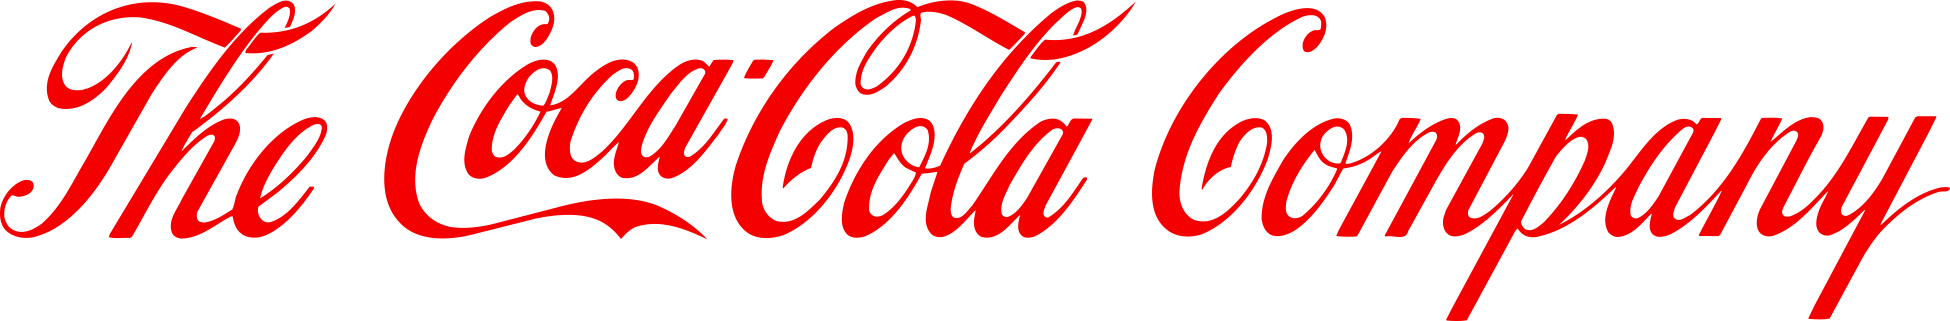 Coca-Cola Company Logo